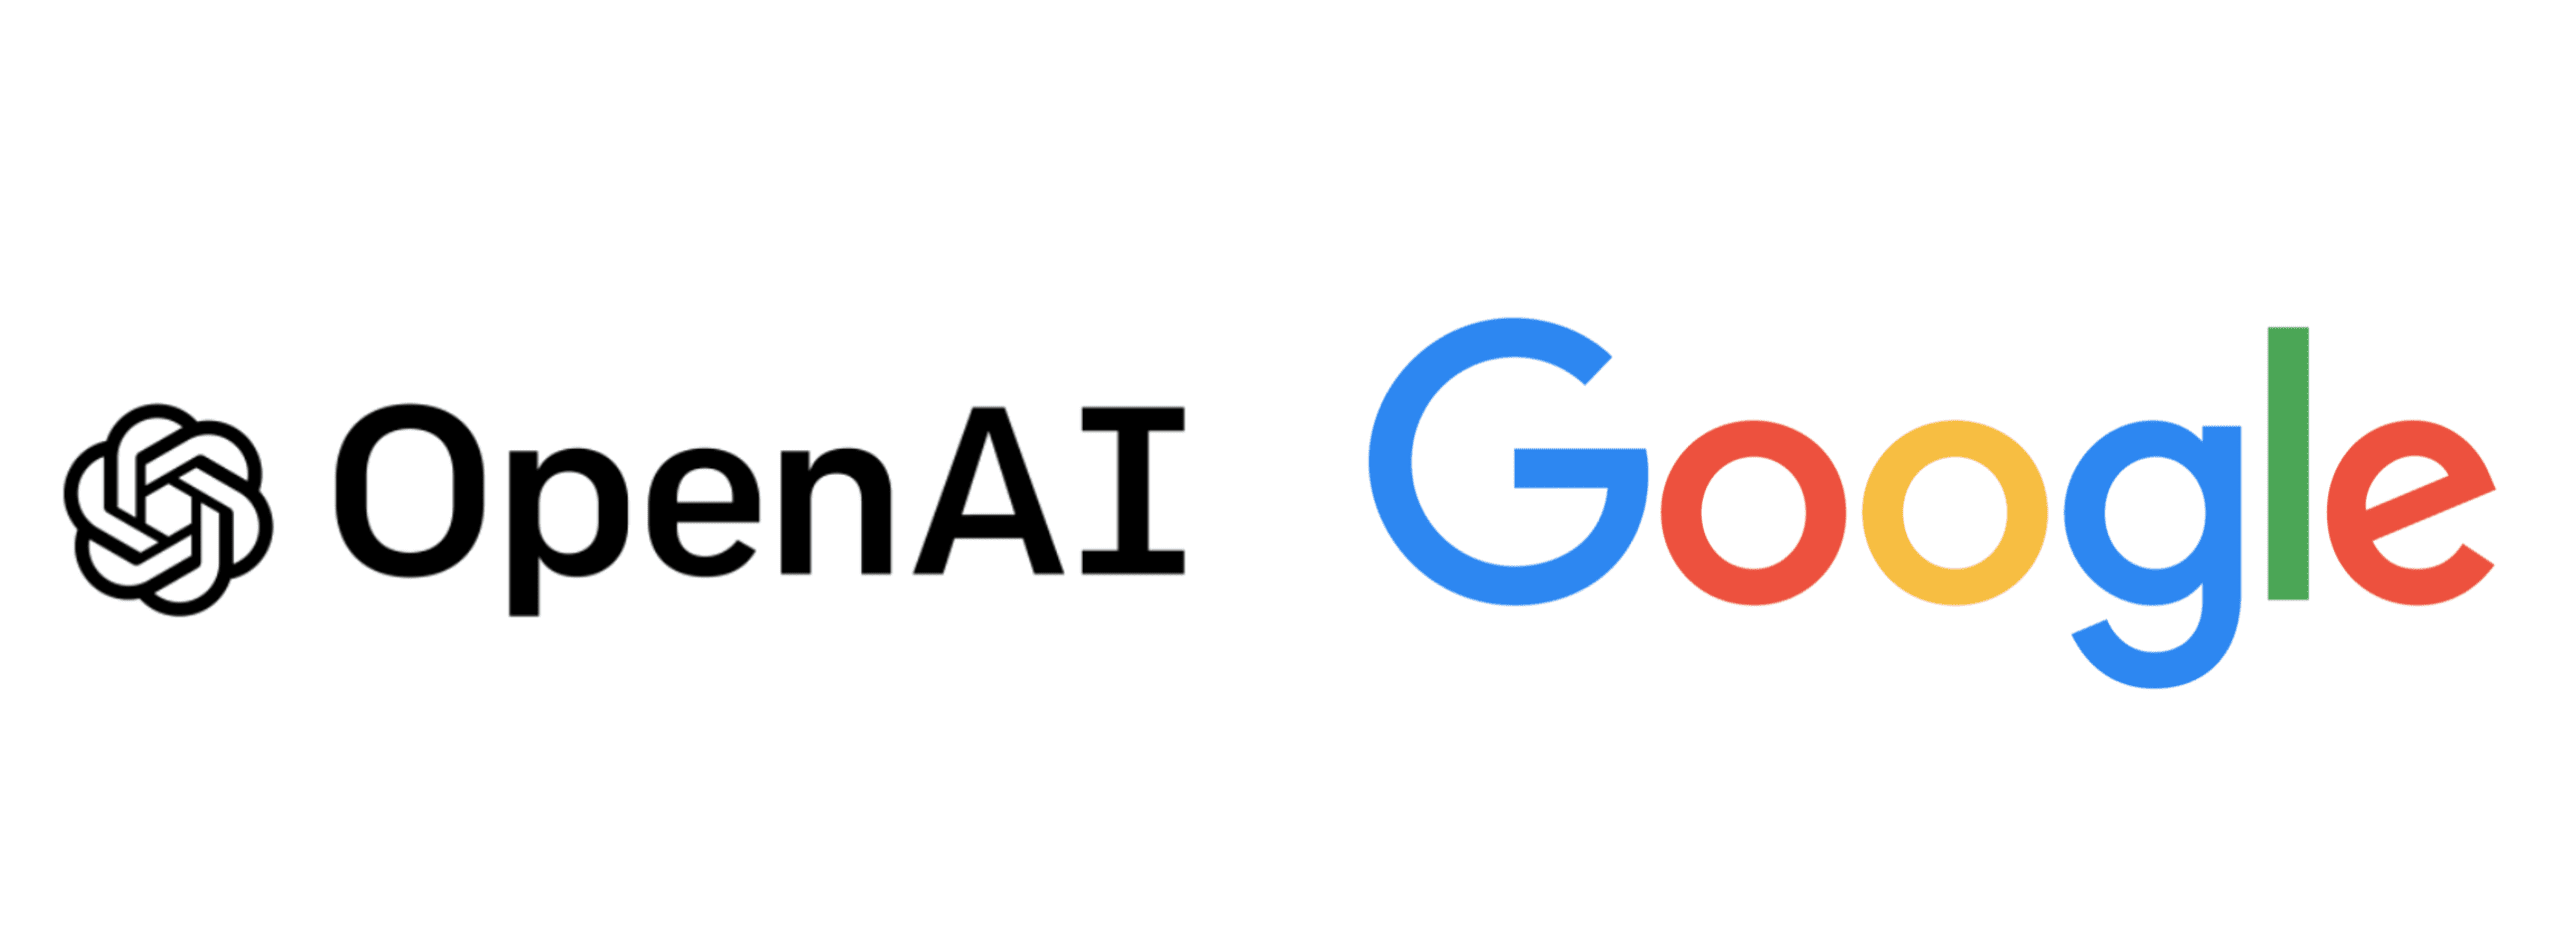 OpenAI and Google logos